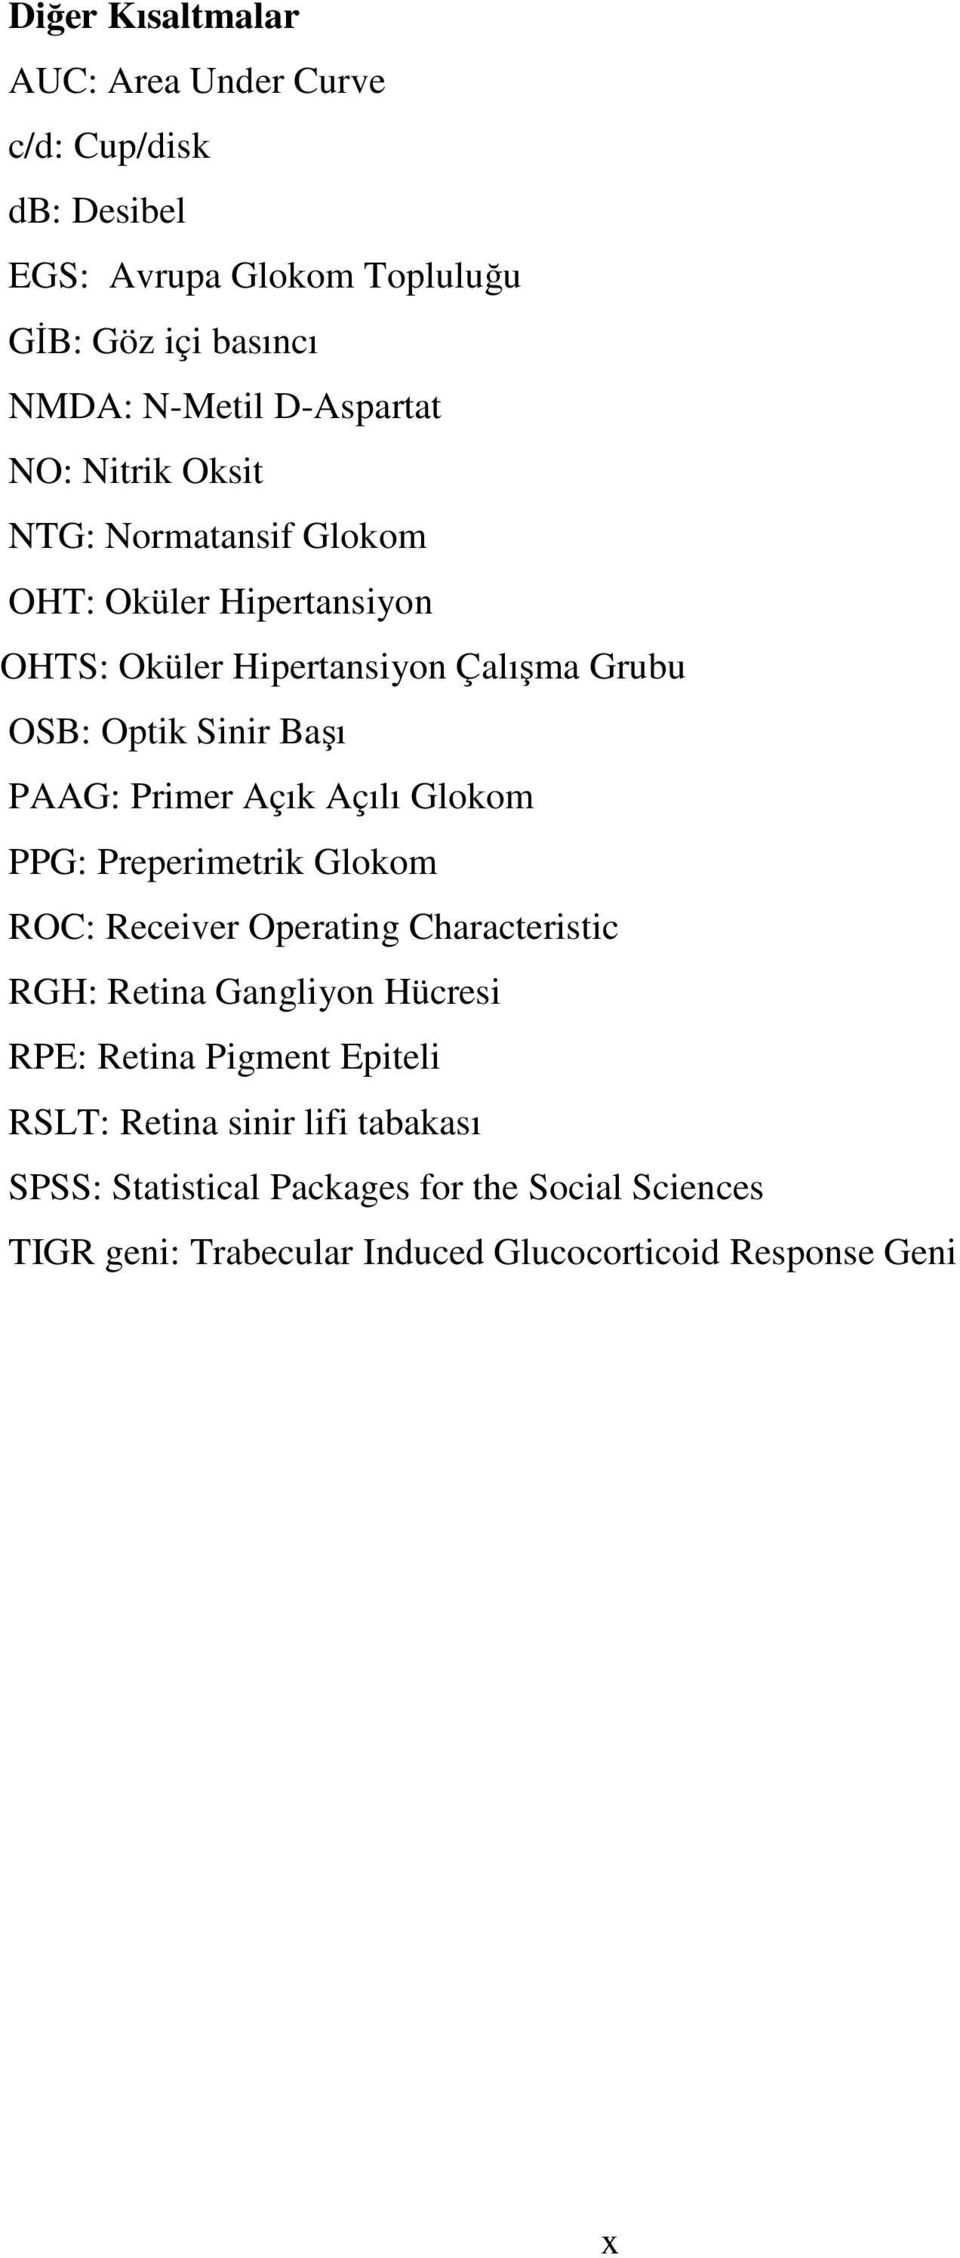 Açık Açılı Glokom PPG: Preperimetrik Glokom ROC: Receiver Operating Characteristic RGH: Retina Gangliyon Hücresi RPE: Retina Pigment Epiteli